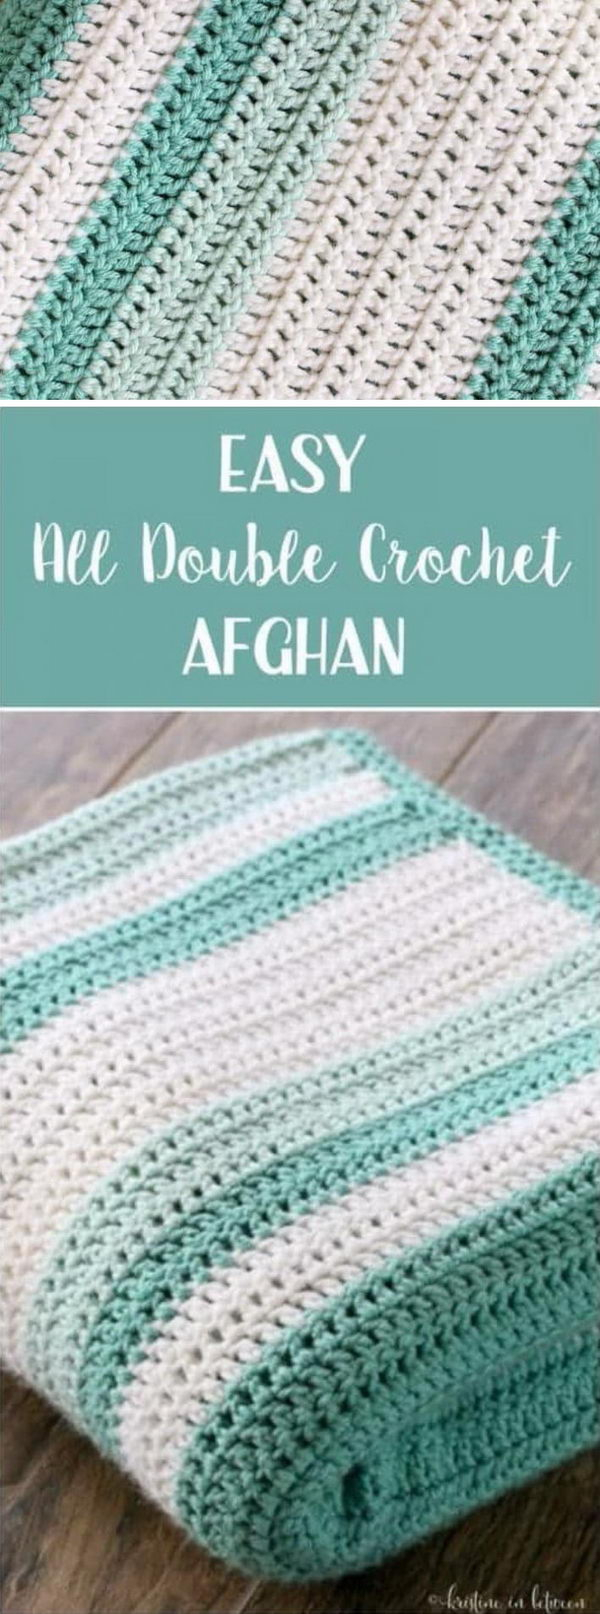 Crochet Blanket Pattern For Beginners 30 Free Crochet Patterns For Blankets Hative